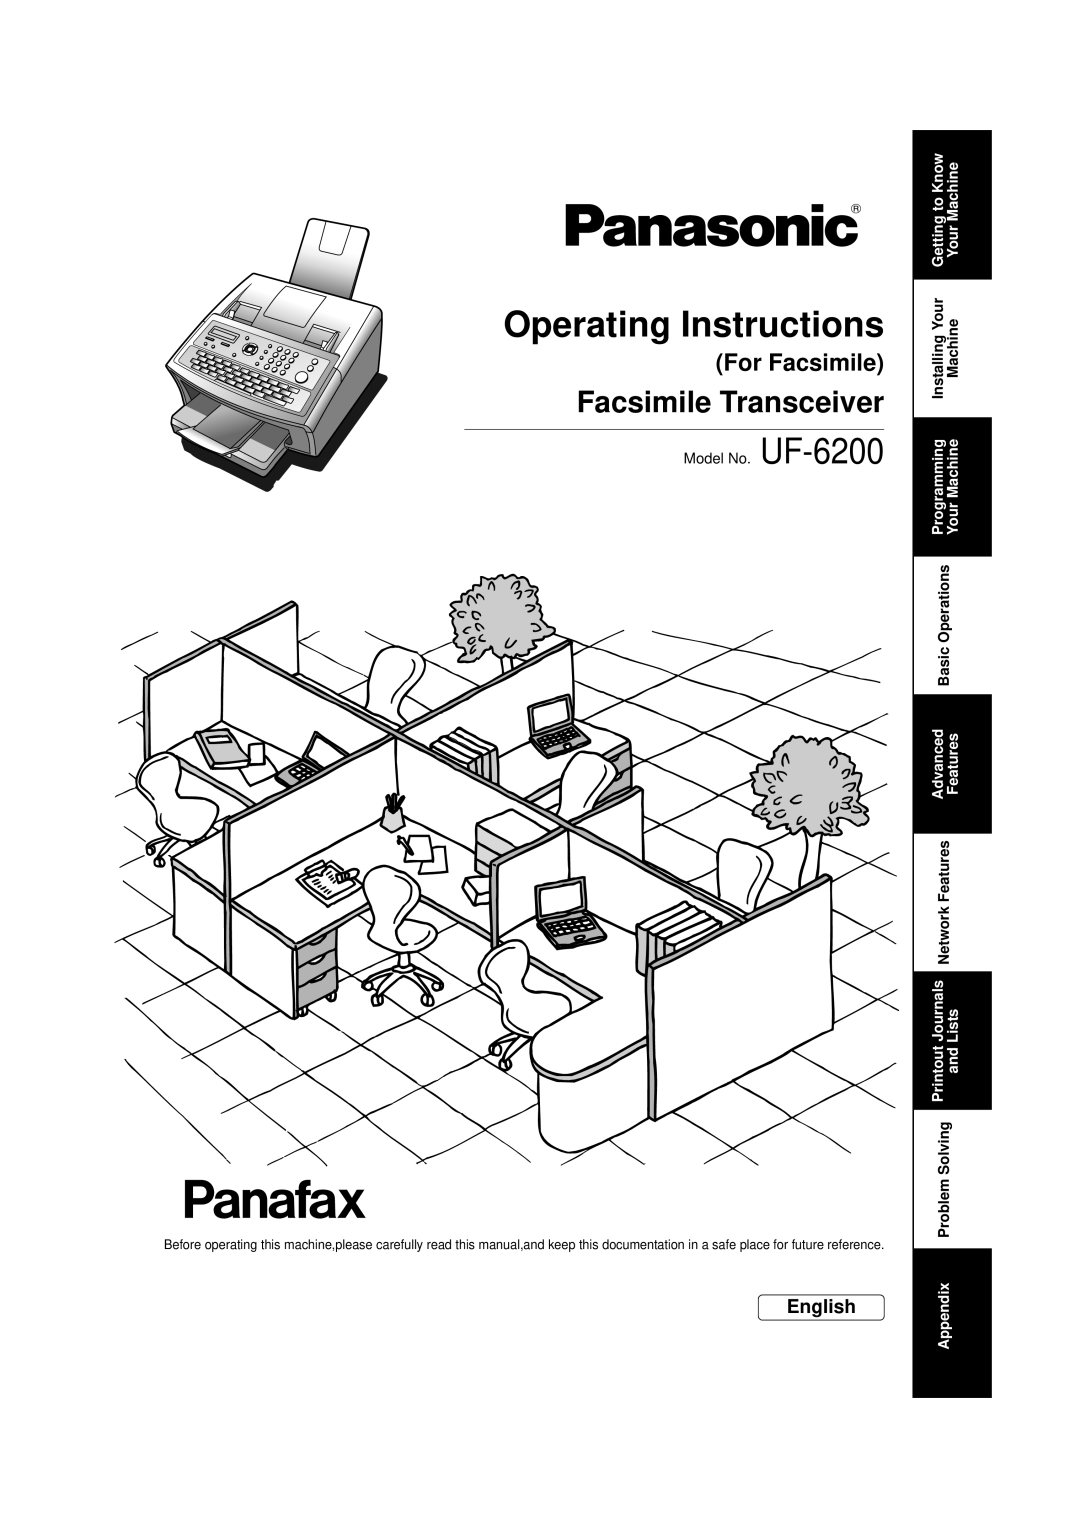 Panasonic UF-6200 operating instructions Operating Instructions, Facsimile Transceiver, For Facsimile, English 